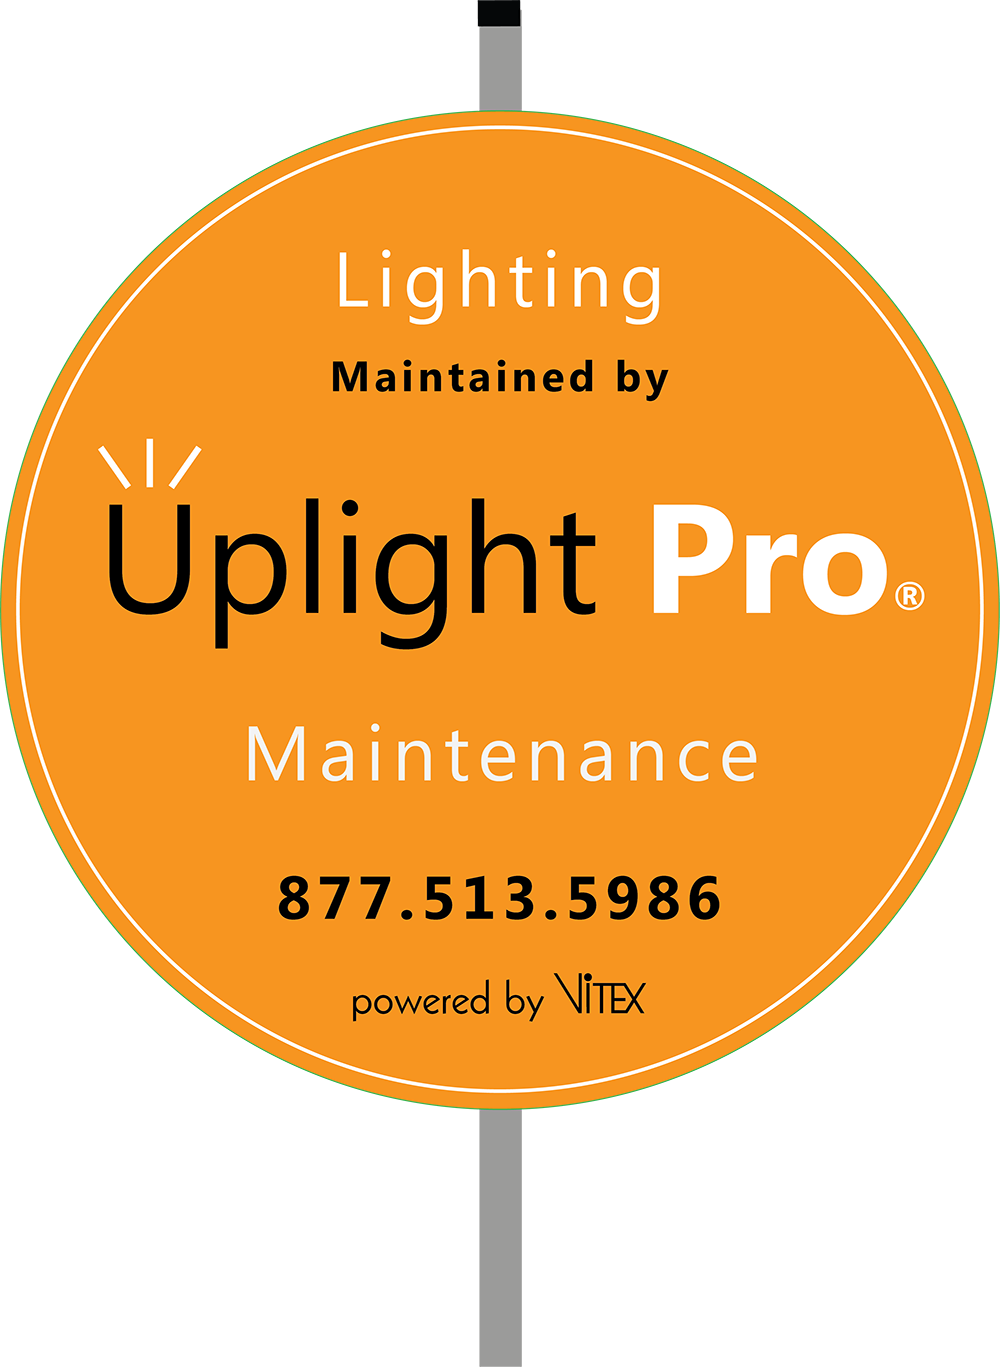 Uplight Pro yard sign